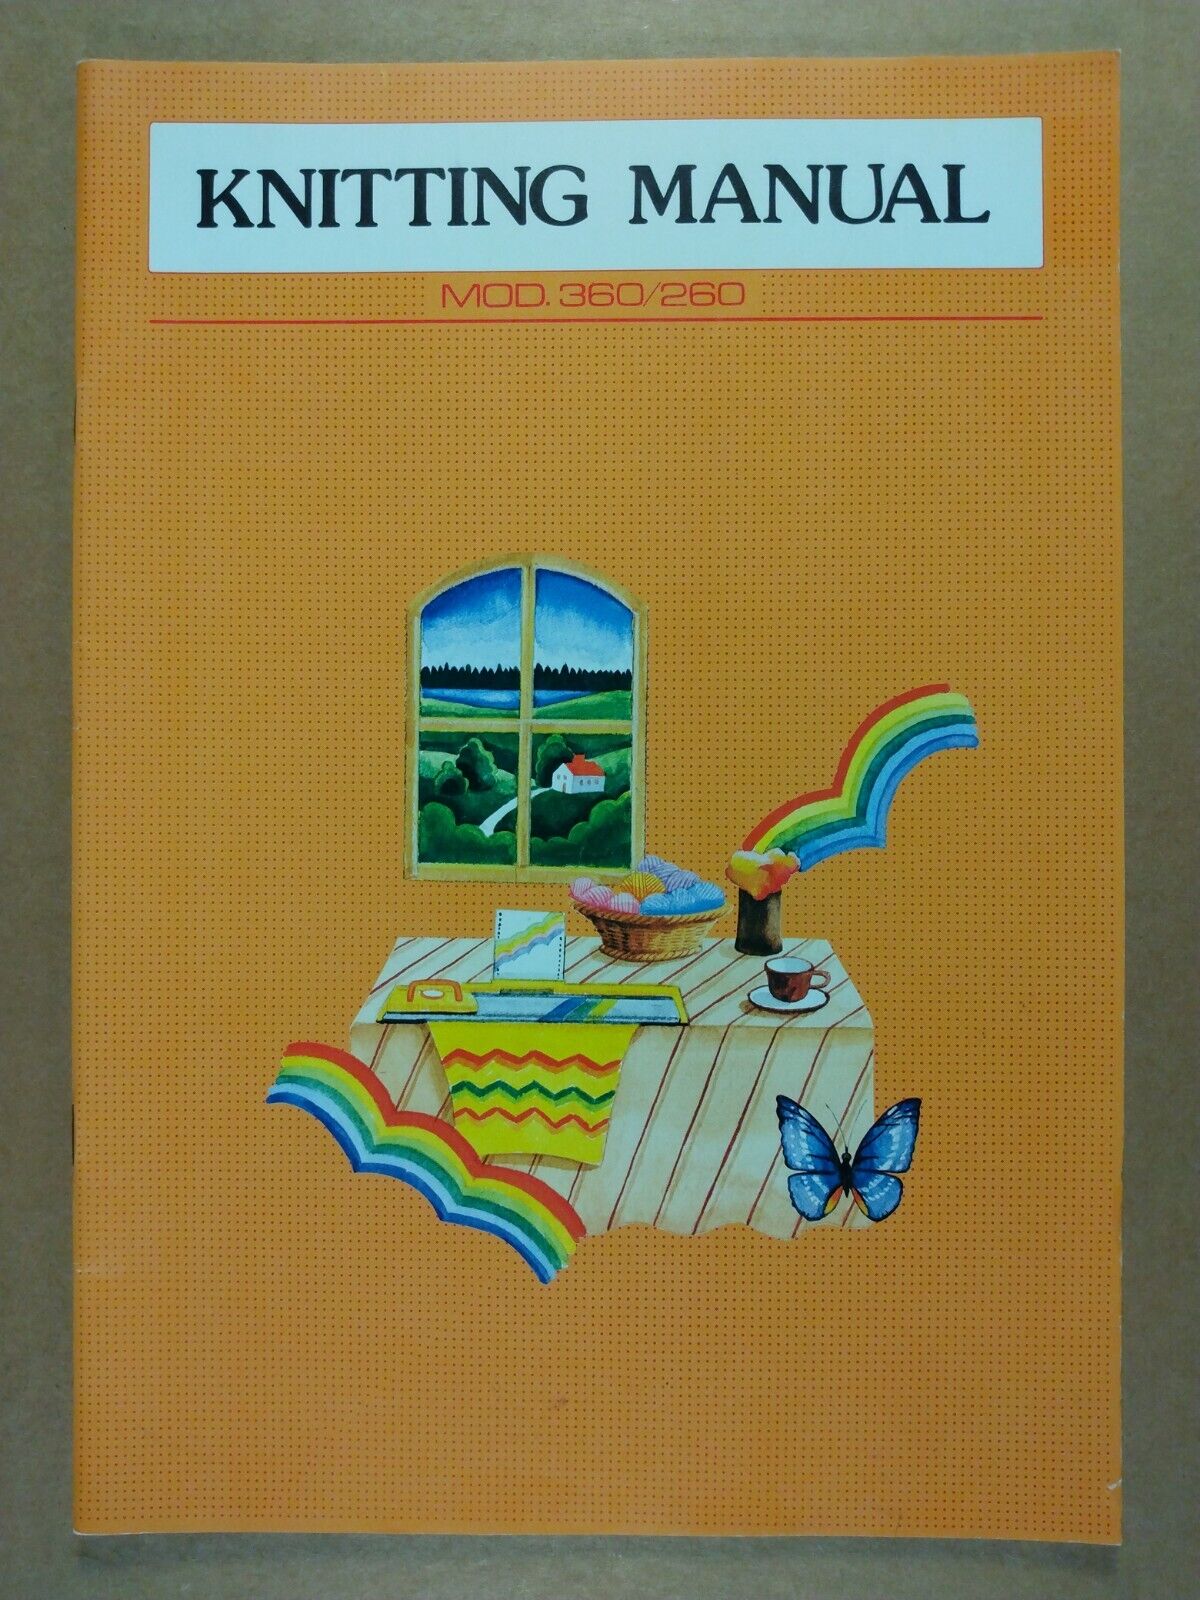 Knitting Machines 360/260 Knitting Manual